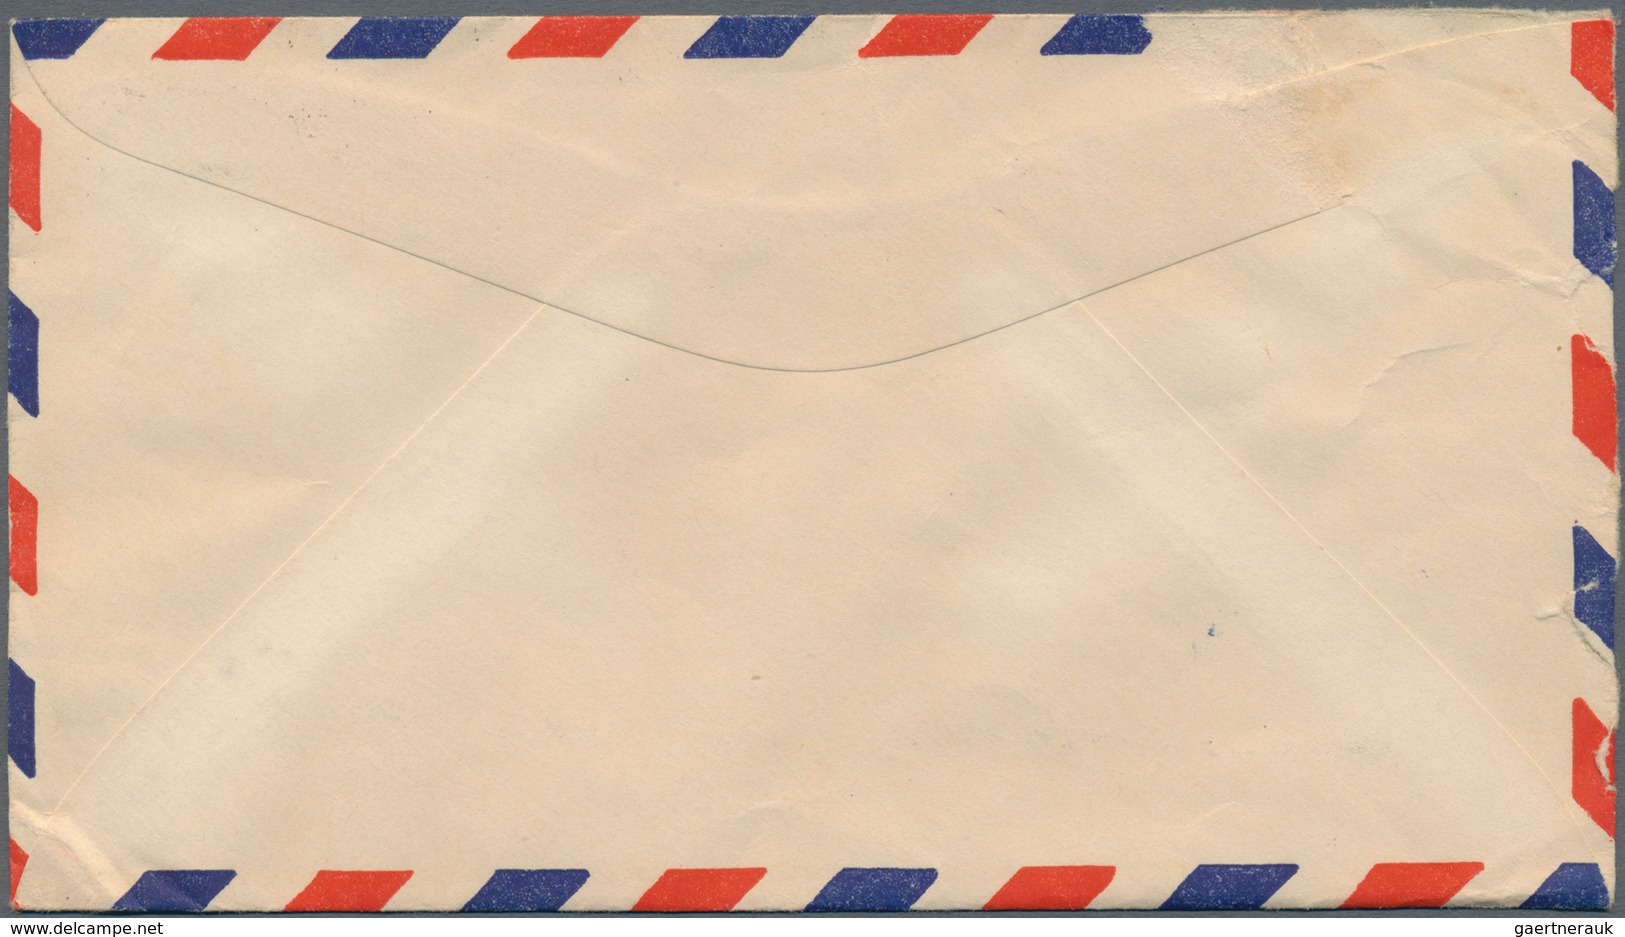 Jordanische Besetzung Palästina: 1950, Correspondence Of Covers (10, 9 By Airmail) From "BETHLEHEM" - Giordania